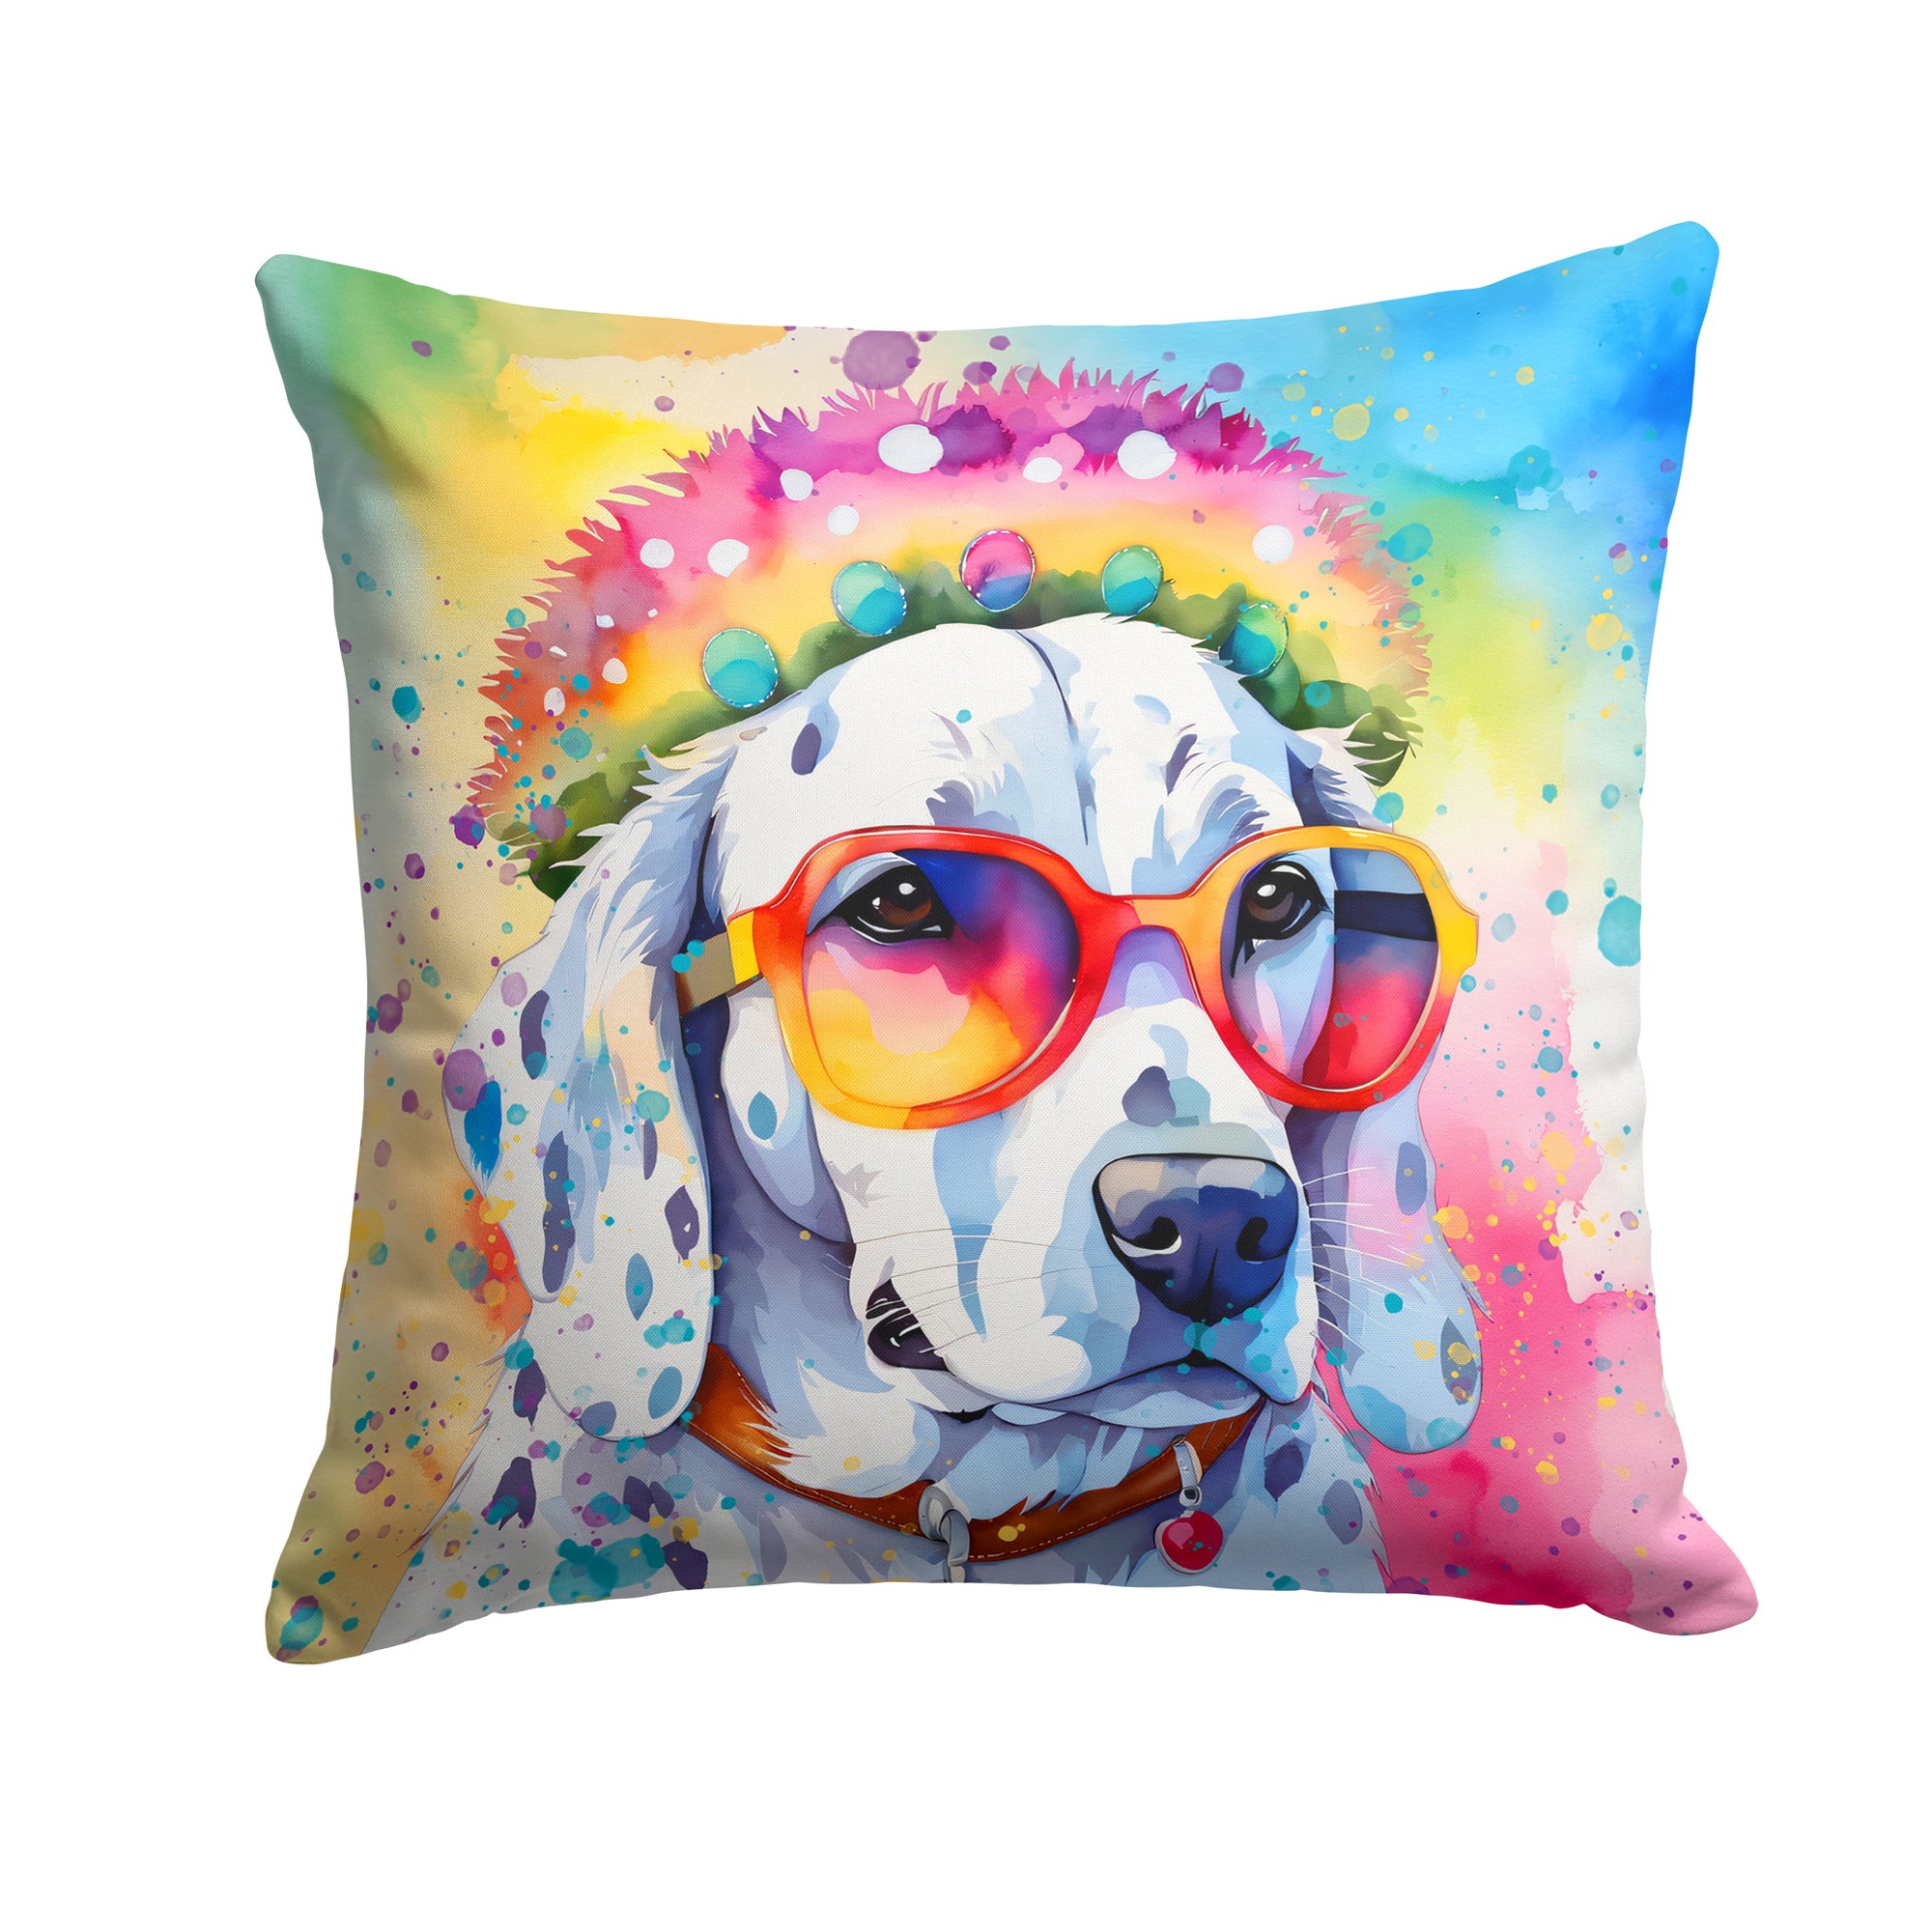 Buy this Dalmatian Hippie Dawg Fabric Decorative Pillow